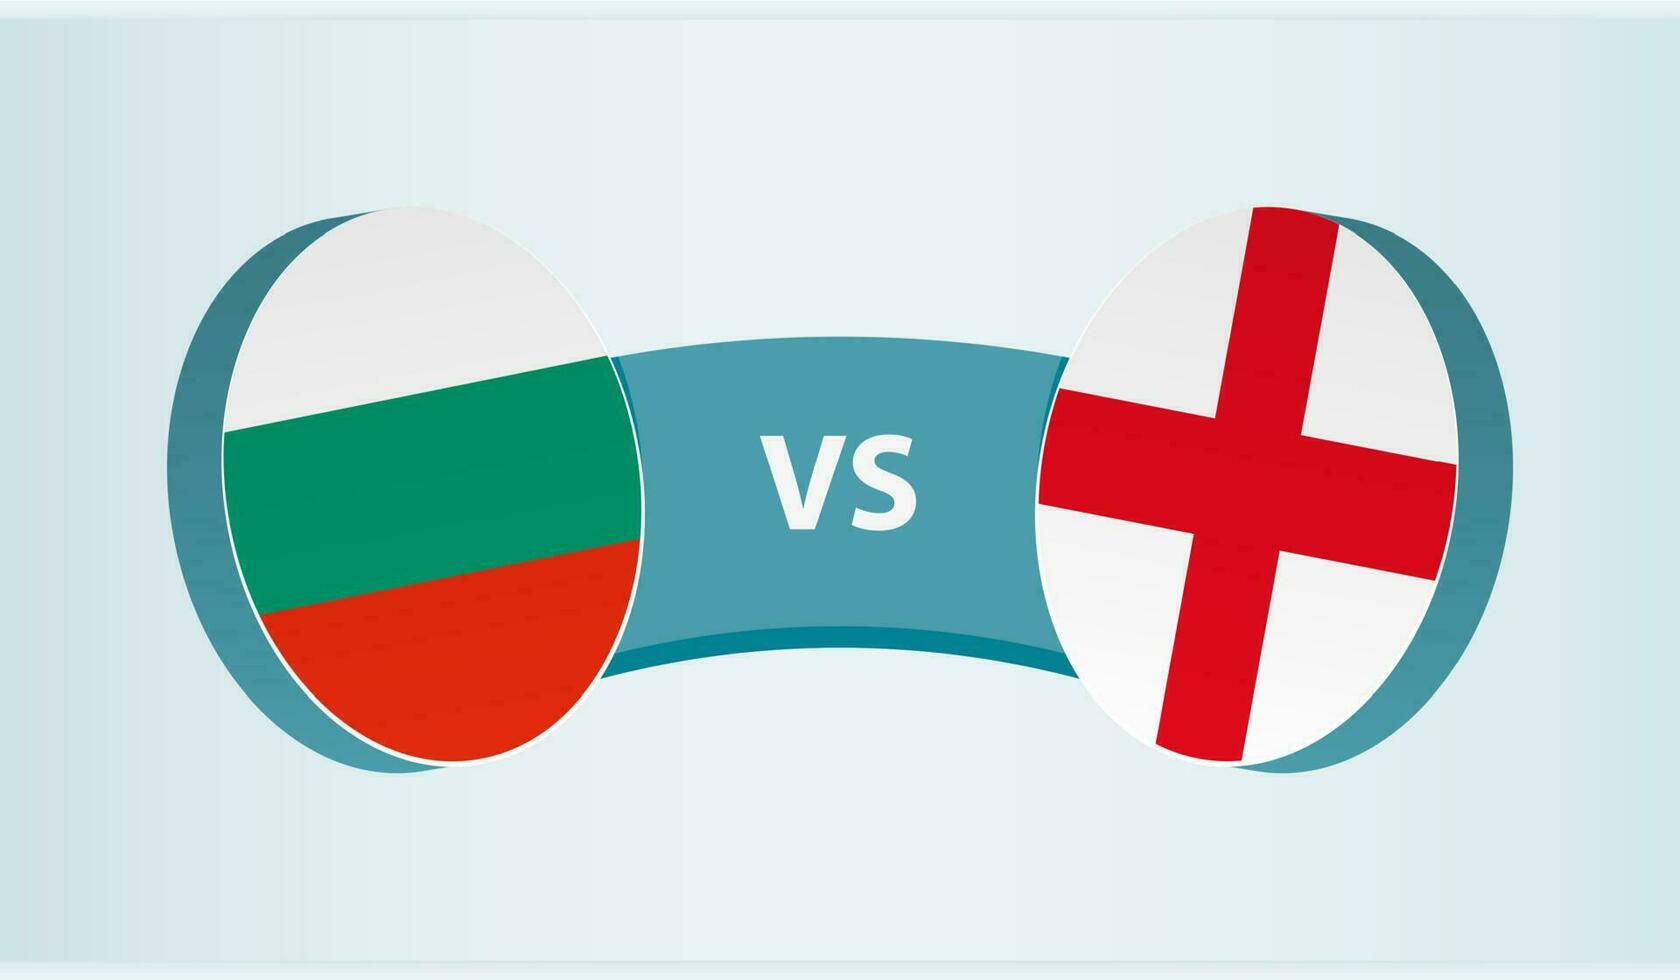 Bulgaria versus England, team sports competition concept. vector